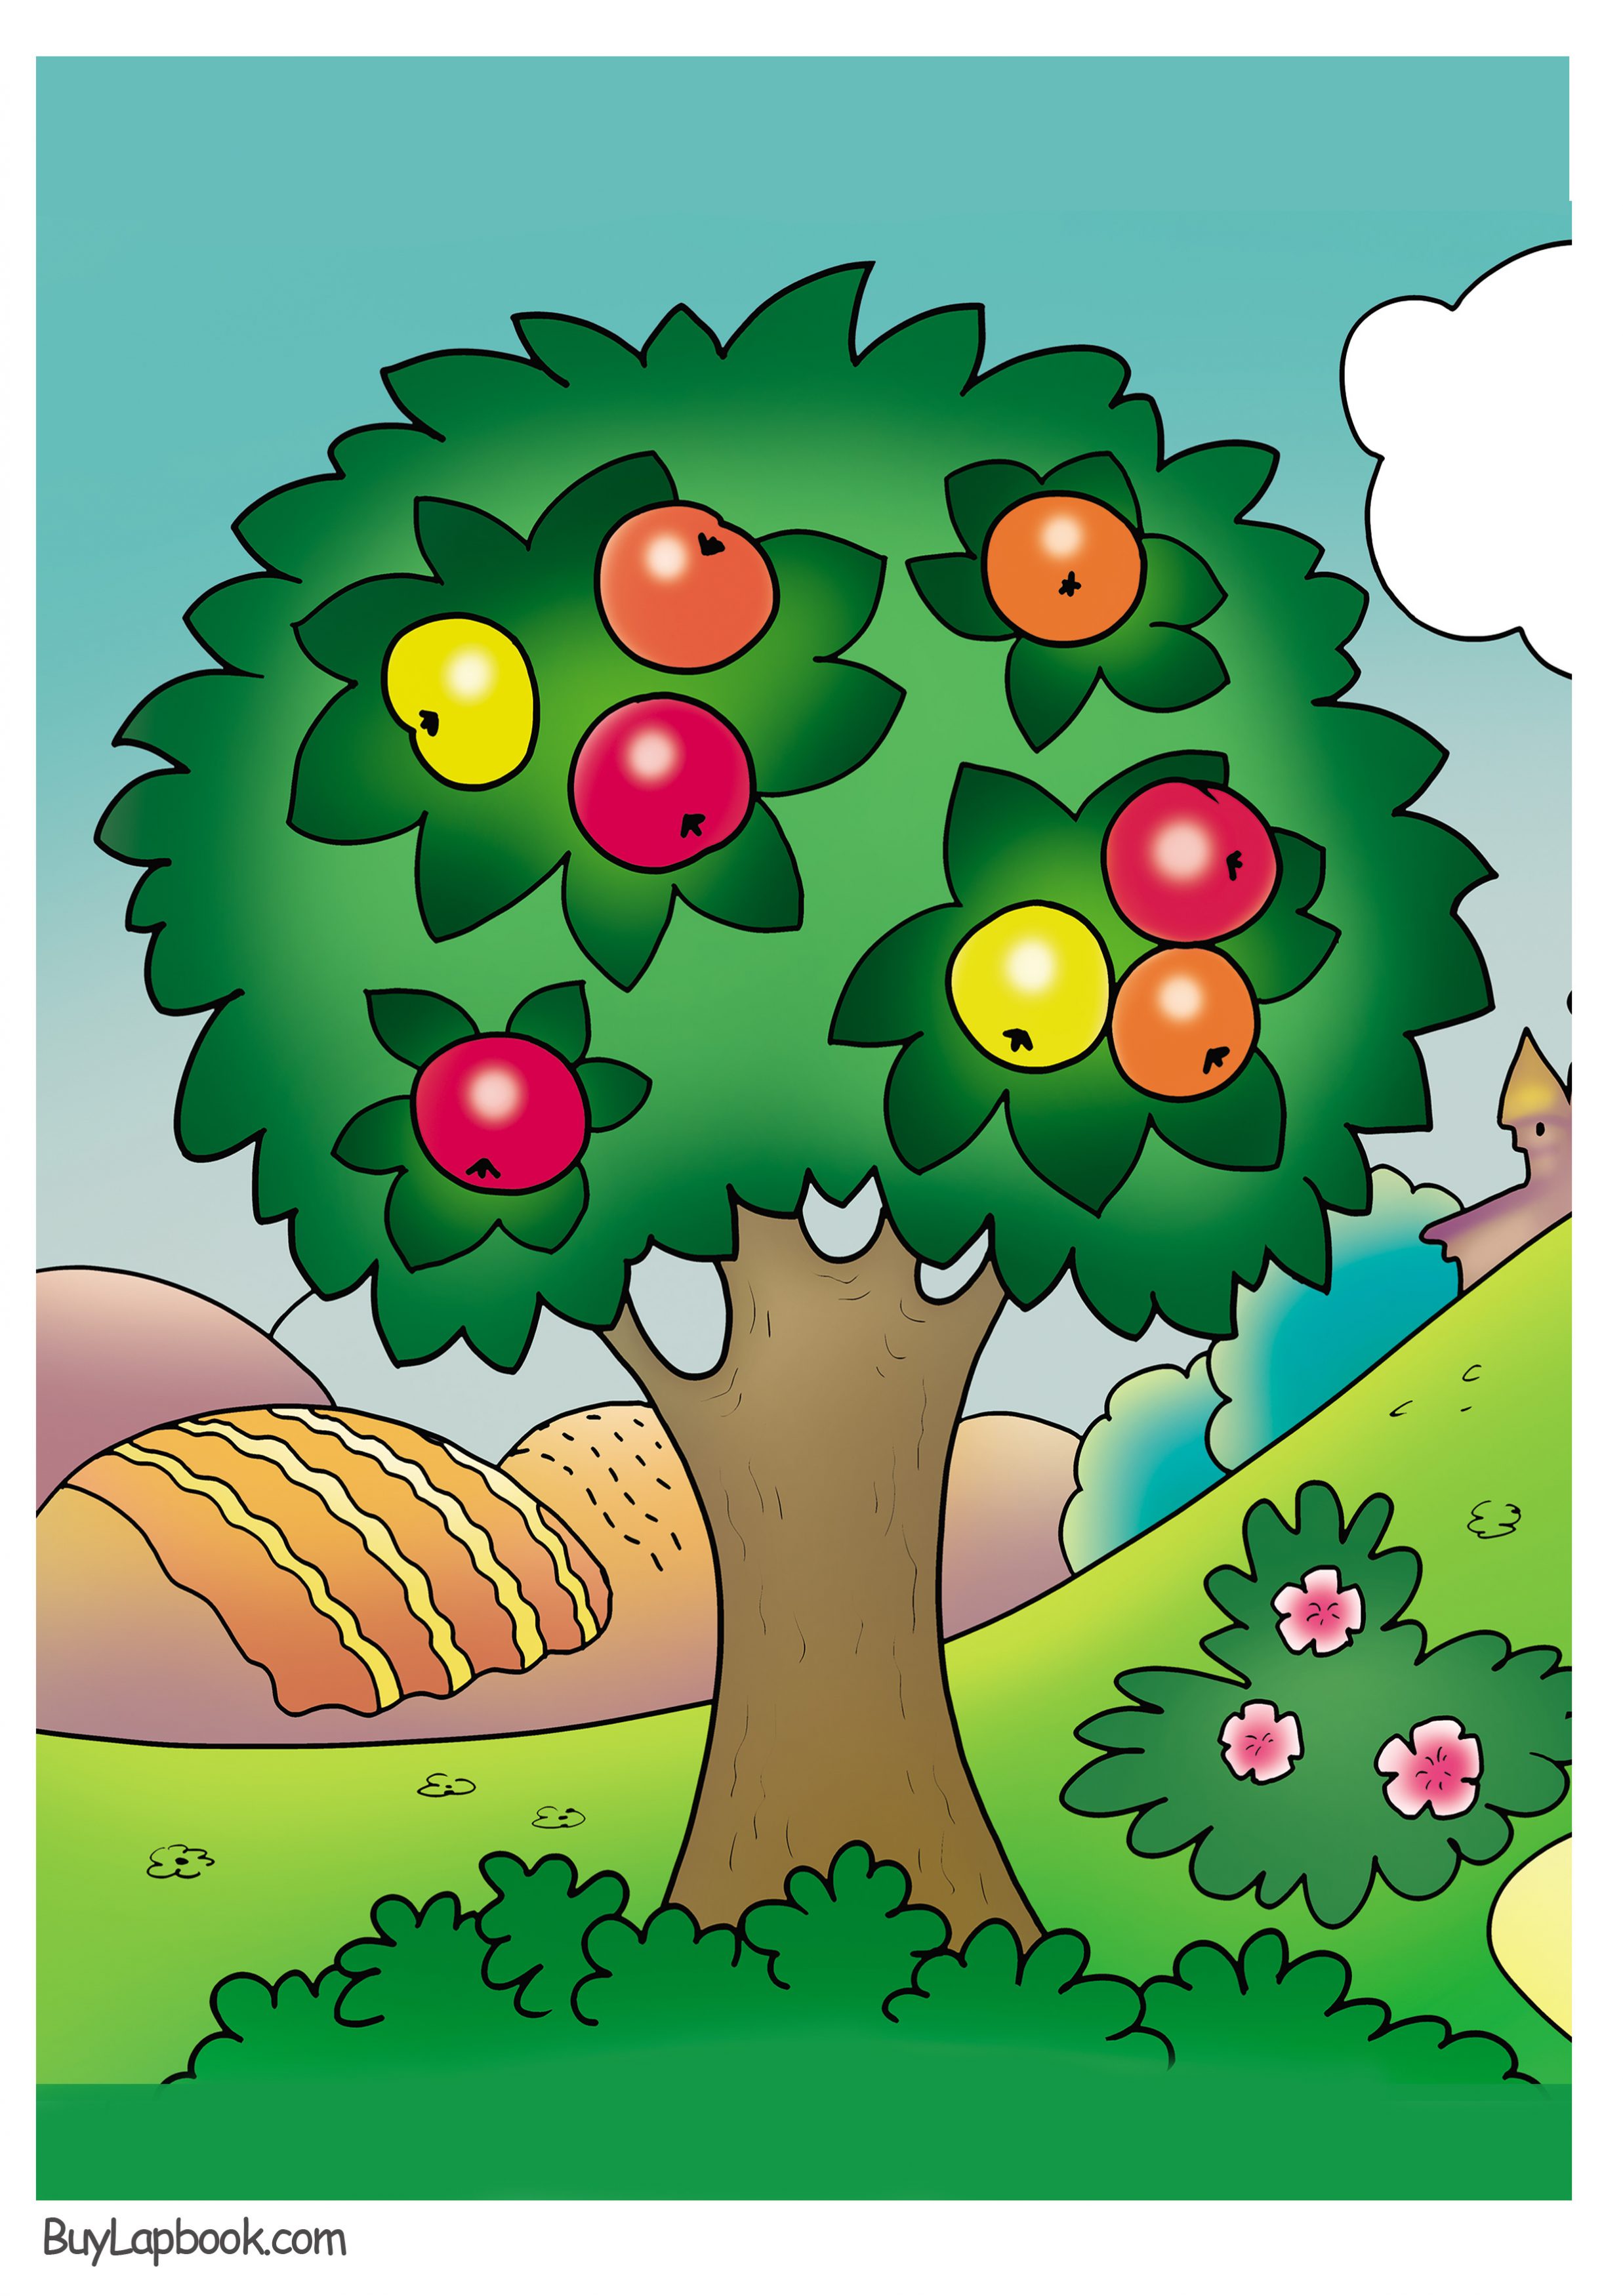 Apple Tree Coloring Page Free Printable | BuyLapbook